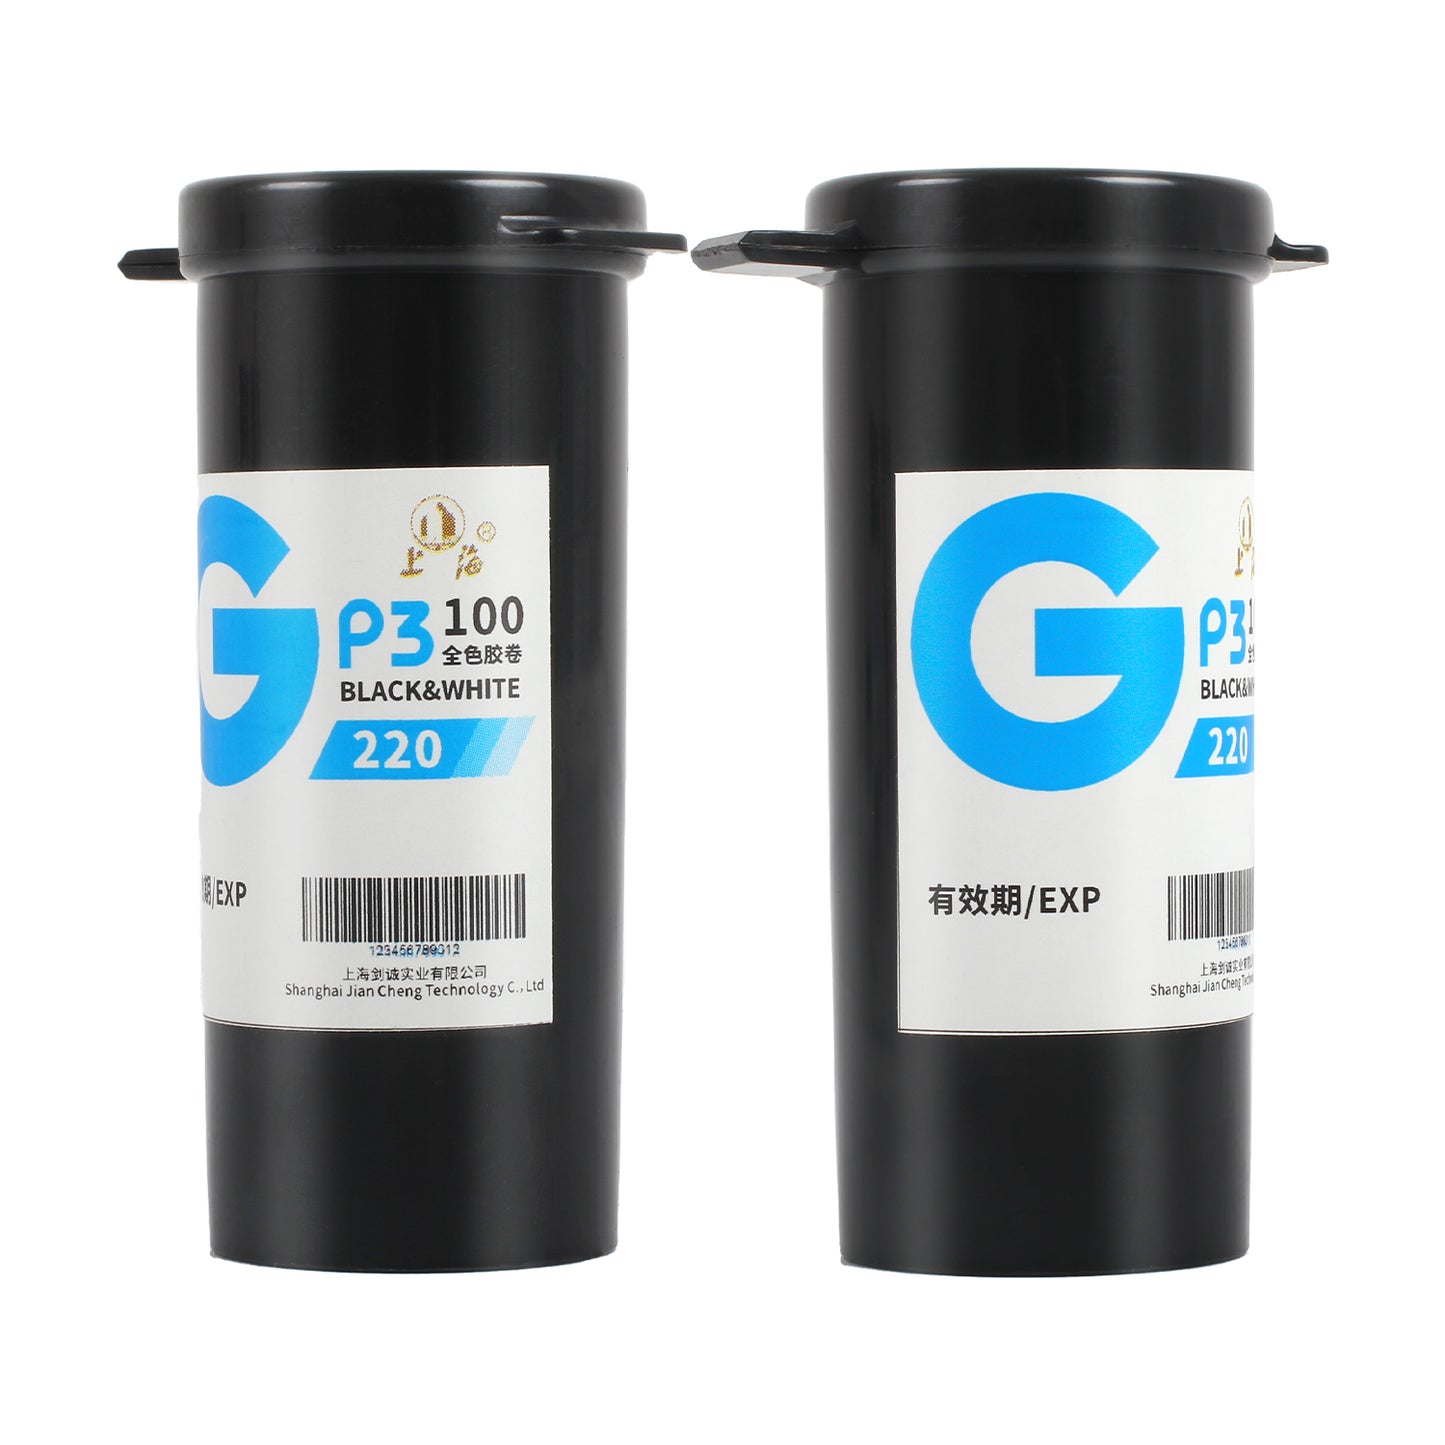 Shanghai GP3 220 Black &amp; White Roll Film ASA DIN ISO 100 B/N Negativo 10-2023 Più fresco per Yashica-24 Olympus Hasselblad Formato 120/220 Fotocamera